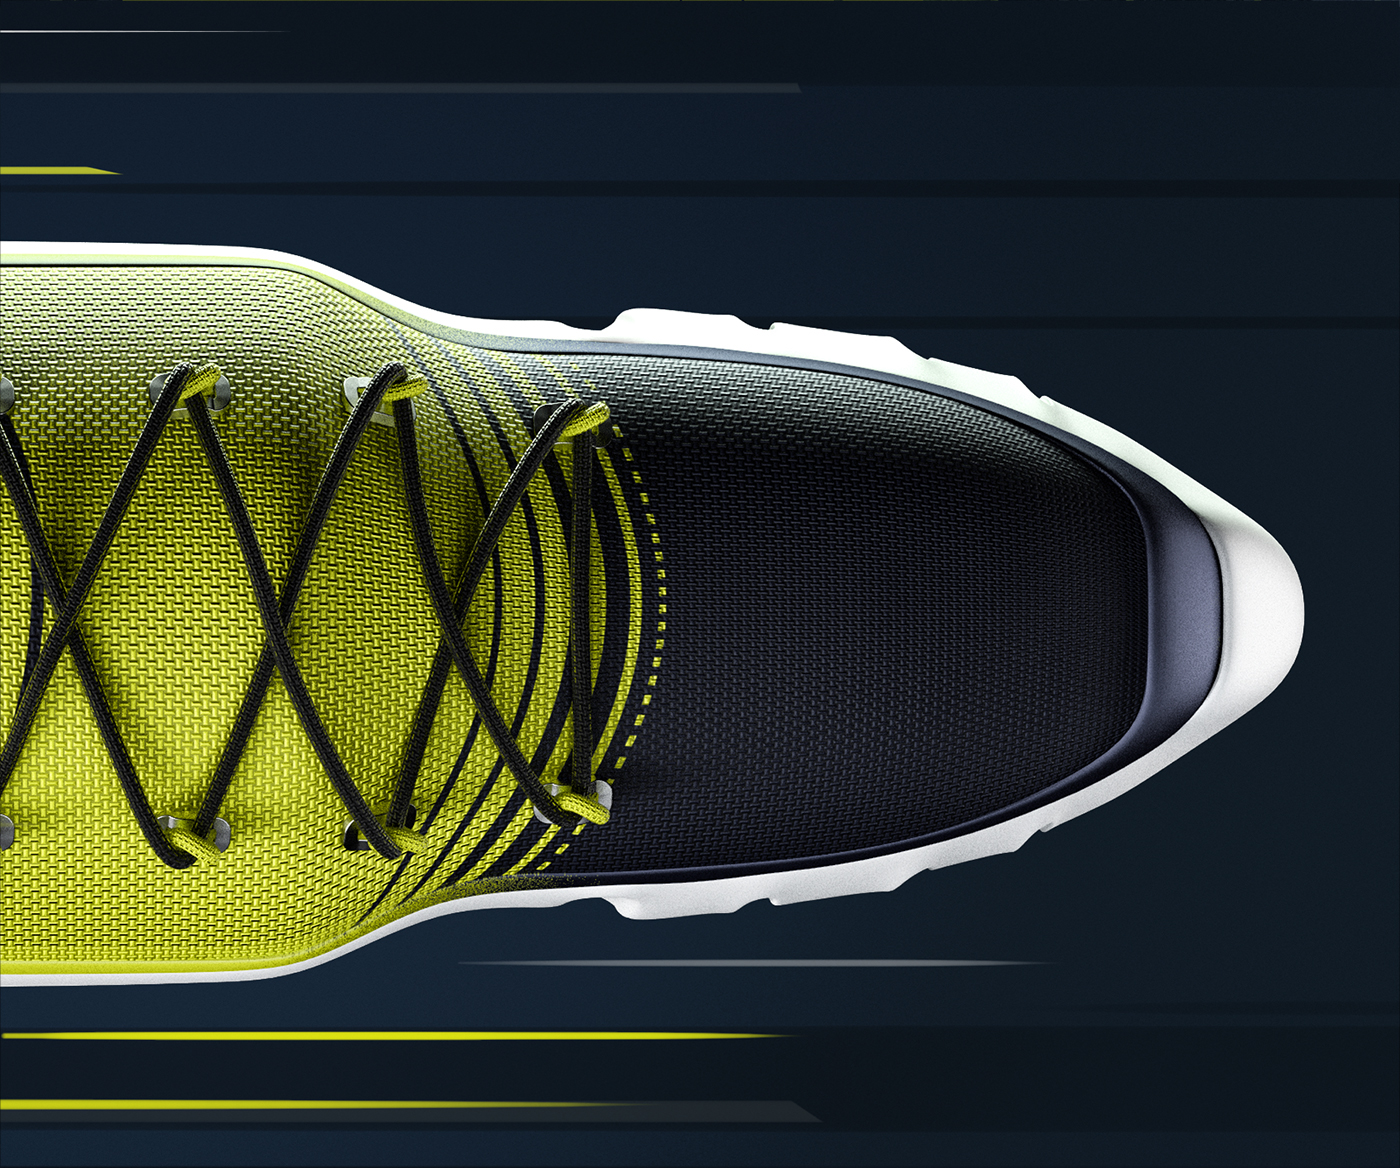 reebok ZPump running Bullet planet 2D vector CGI 3D shoe sneaker kicks neon key visual